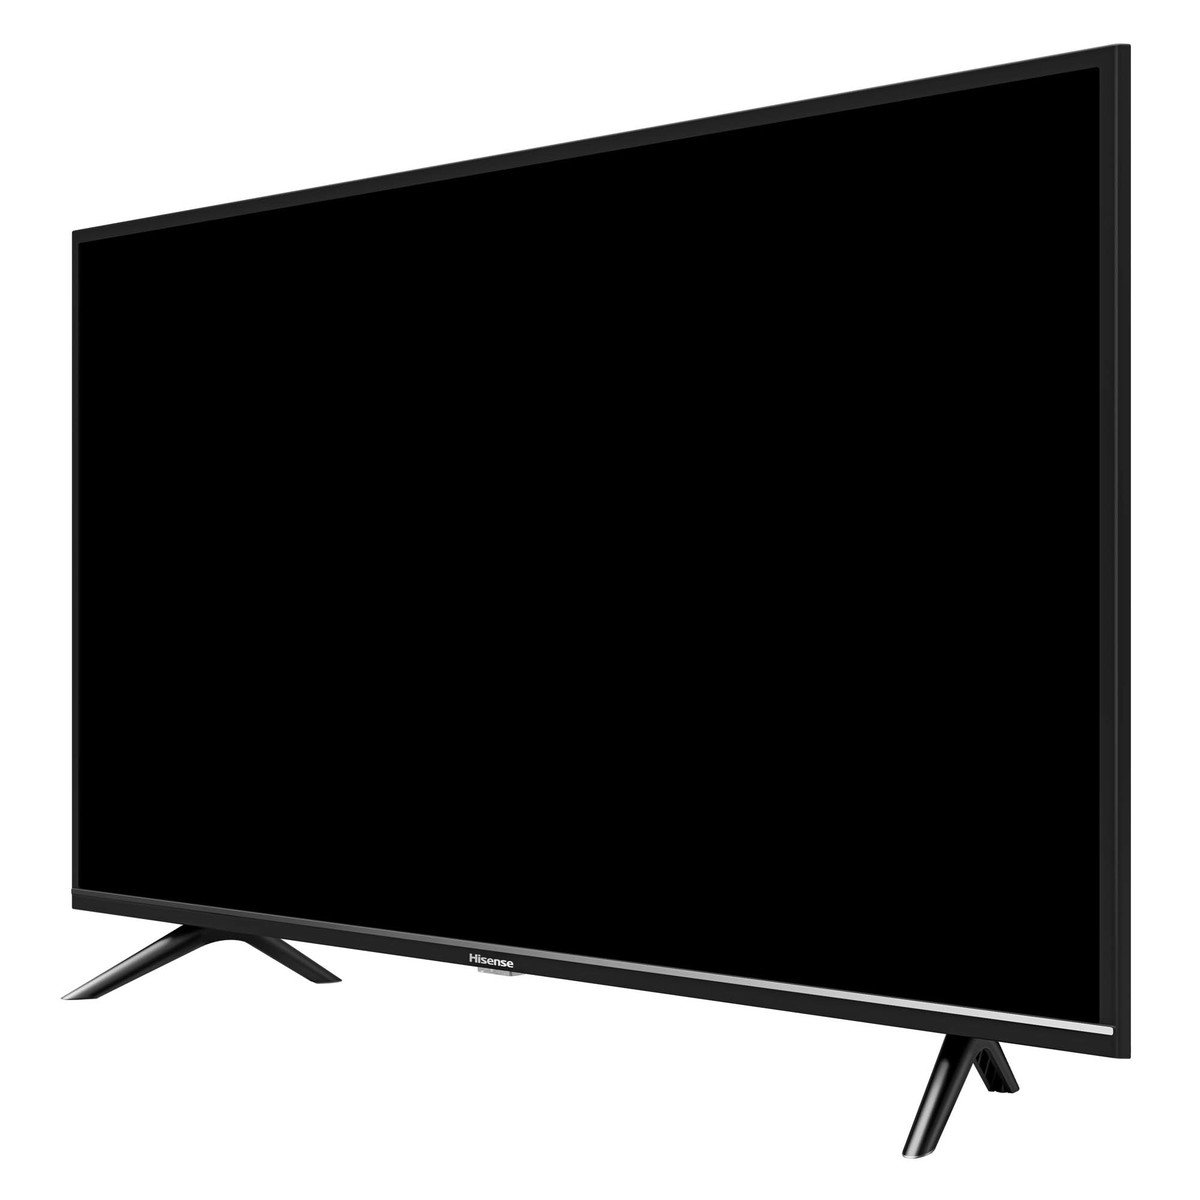 Hisense Full HD Smart LED TV 43B6000PW 43"